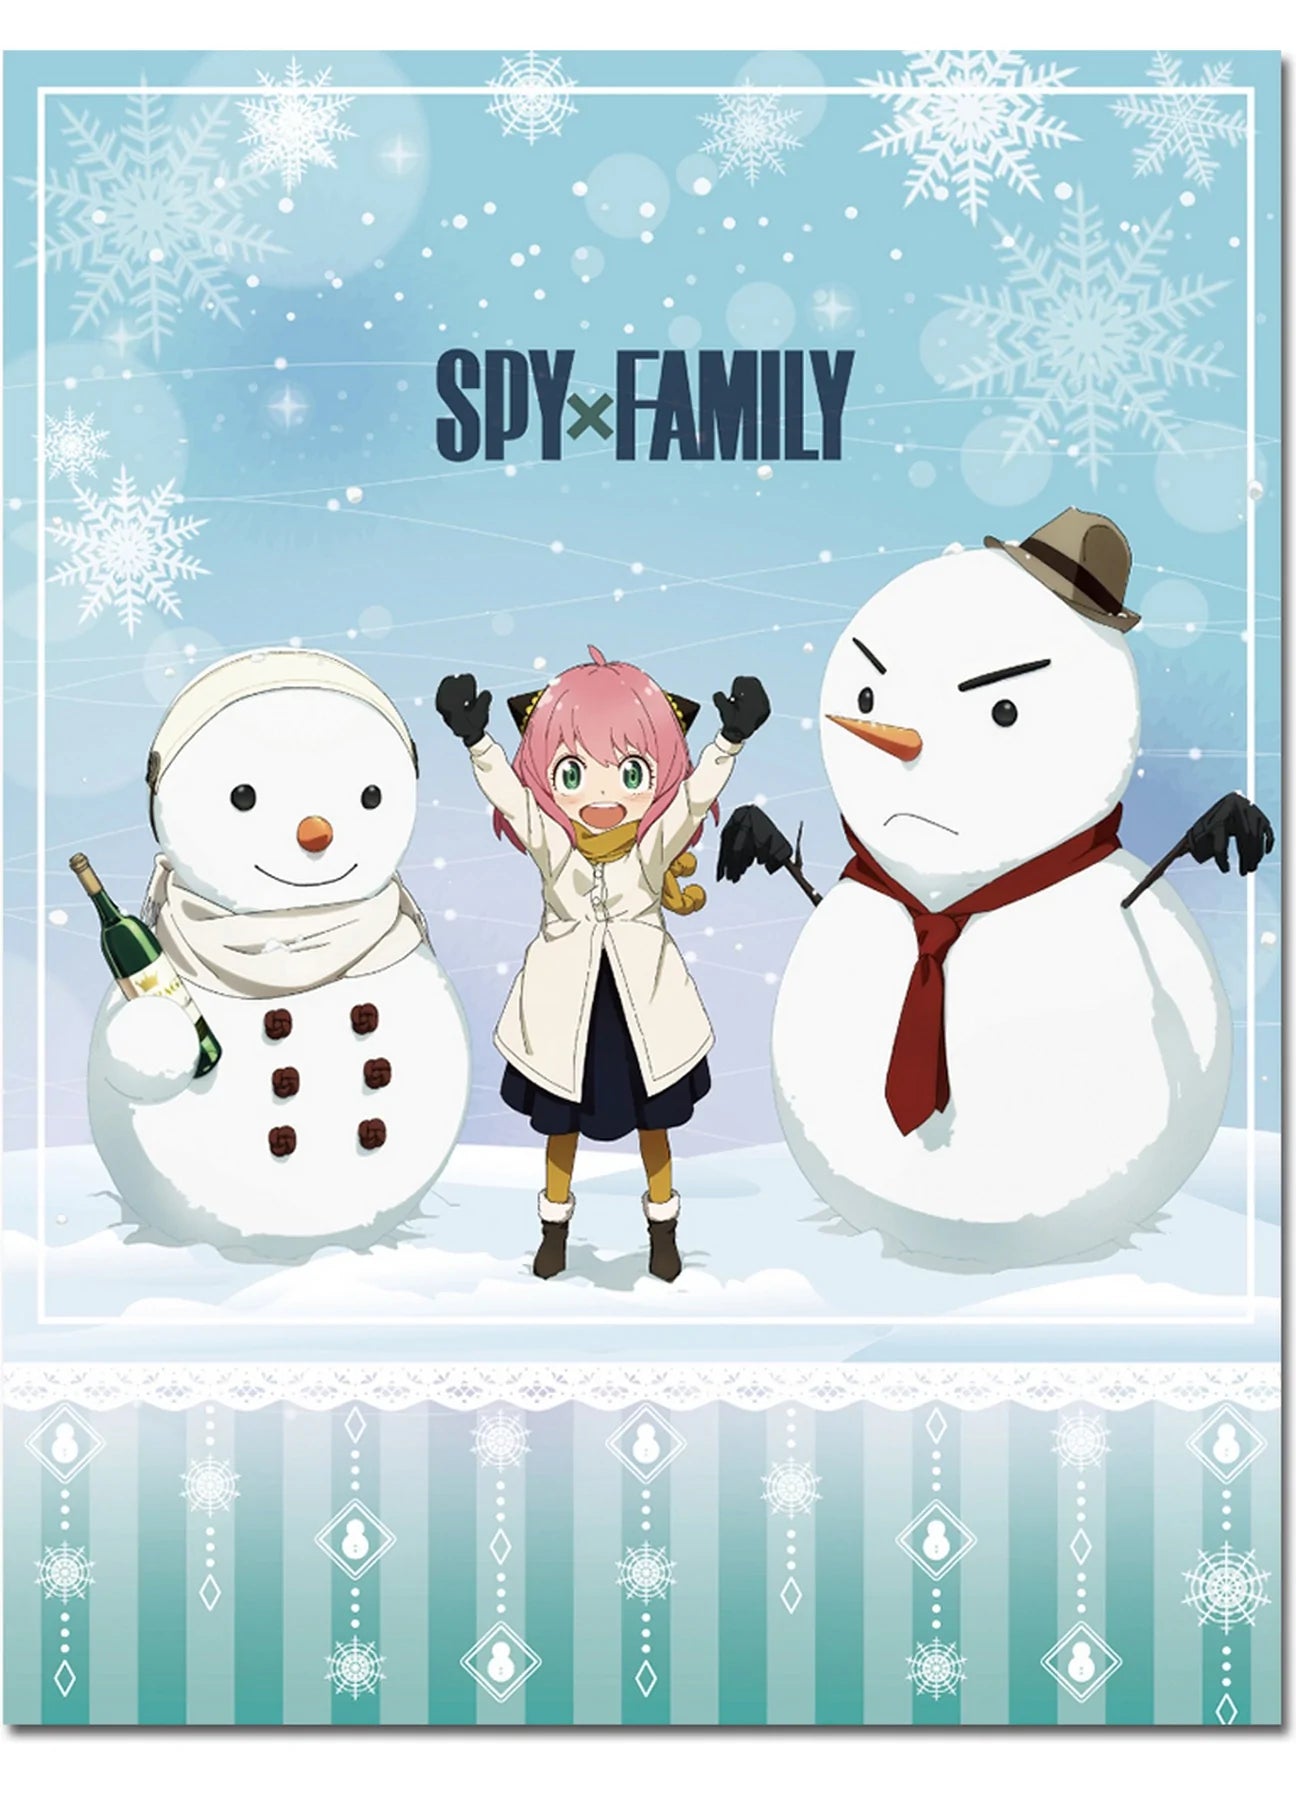 Spy x Family - Anya Snowman Throw Blanket image count 1